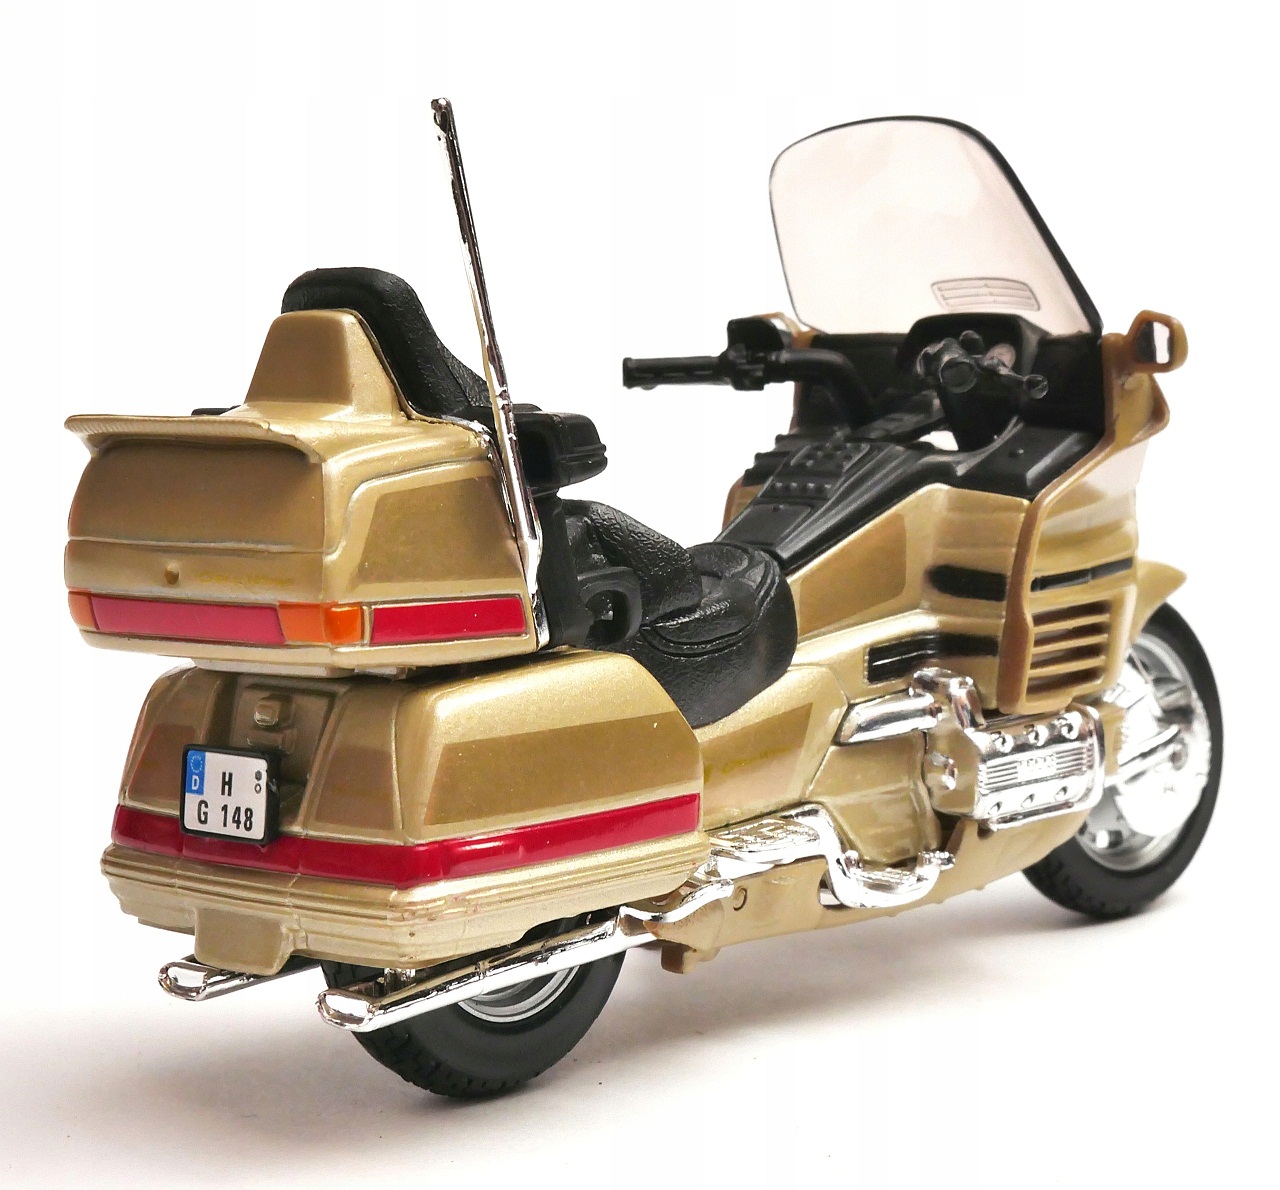 Мотоцикл - Honda Gold Wing  